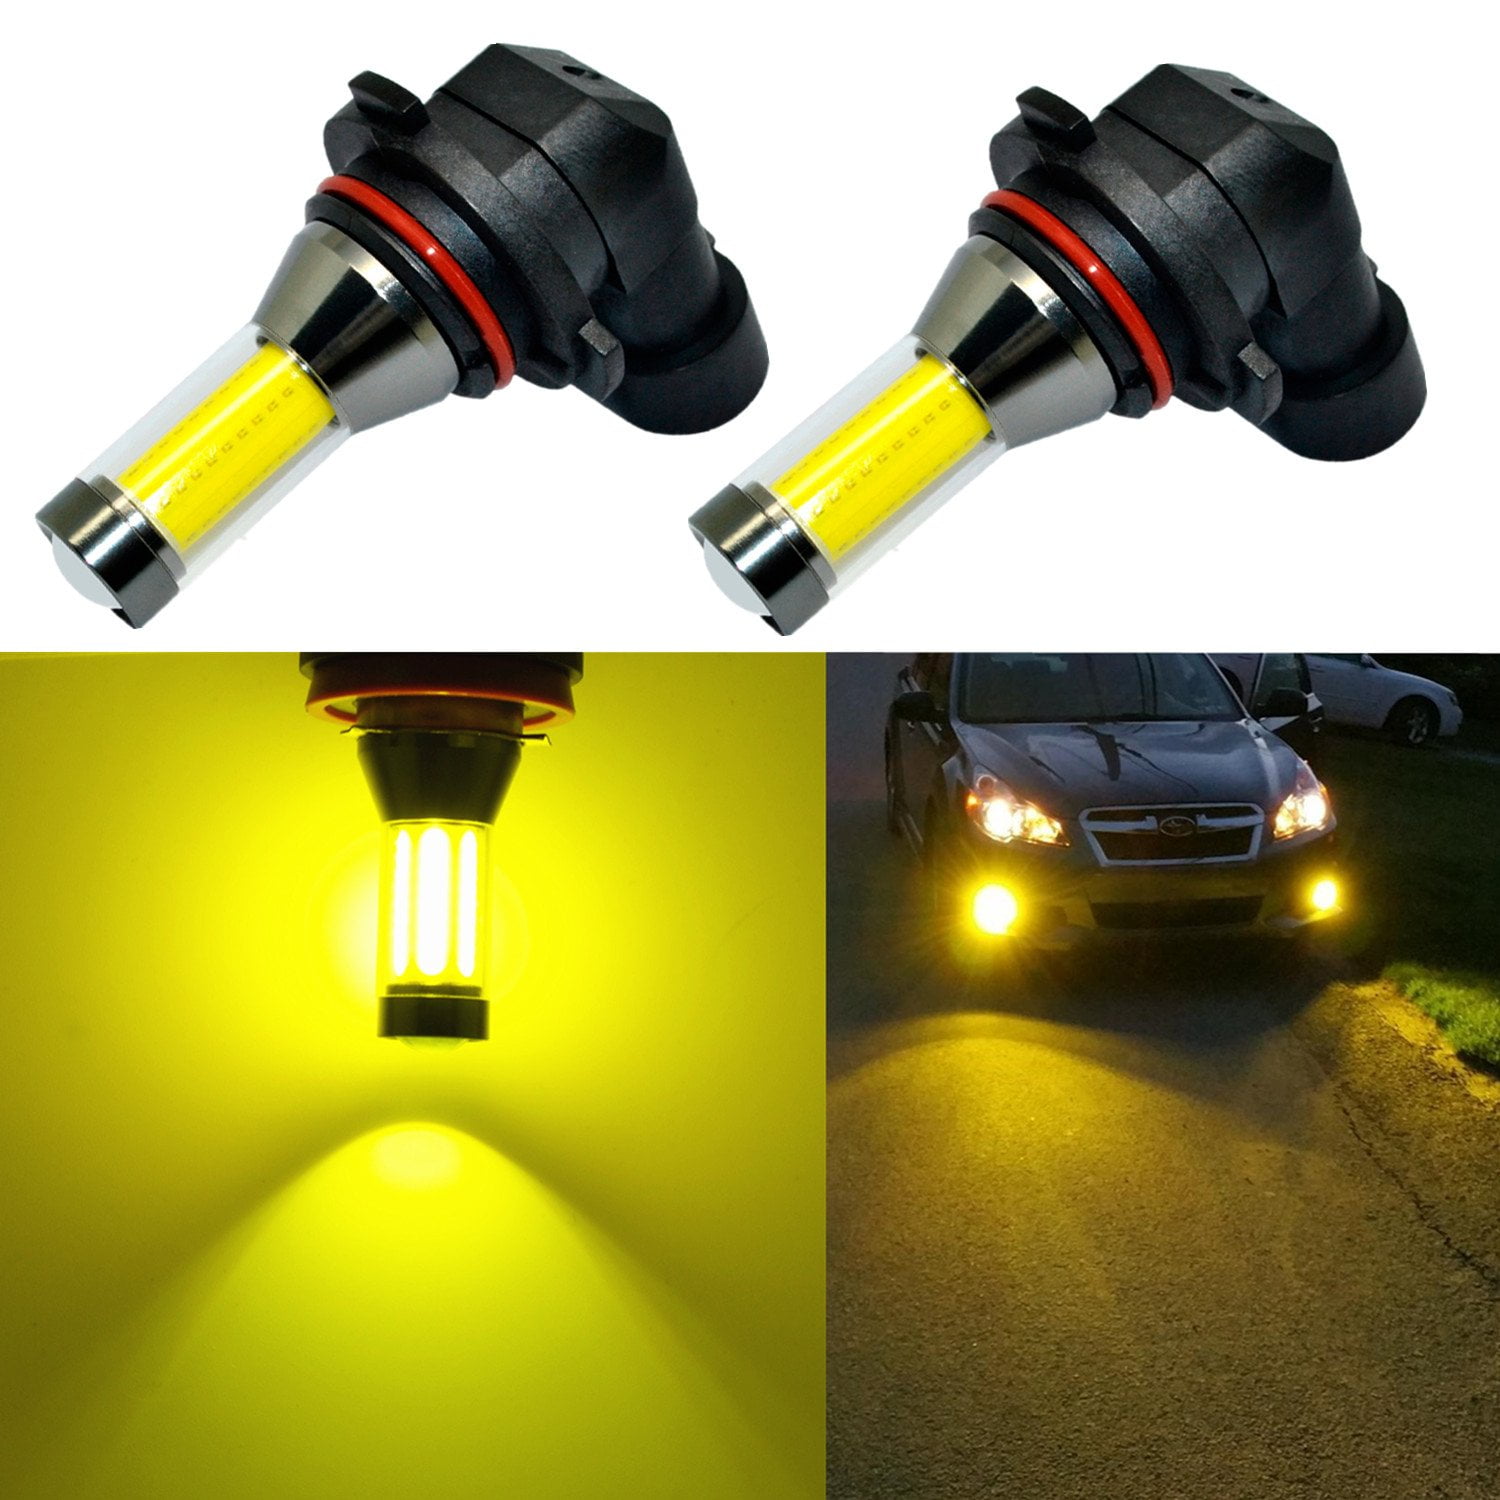 2x HB4 9006 60W CREE LED Spot Fog Light Lamps Bulbs DRL Canbus Error Free 12V 